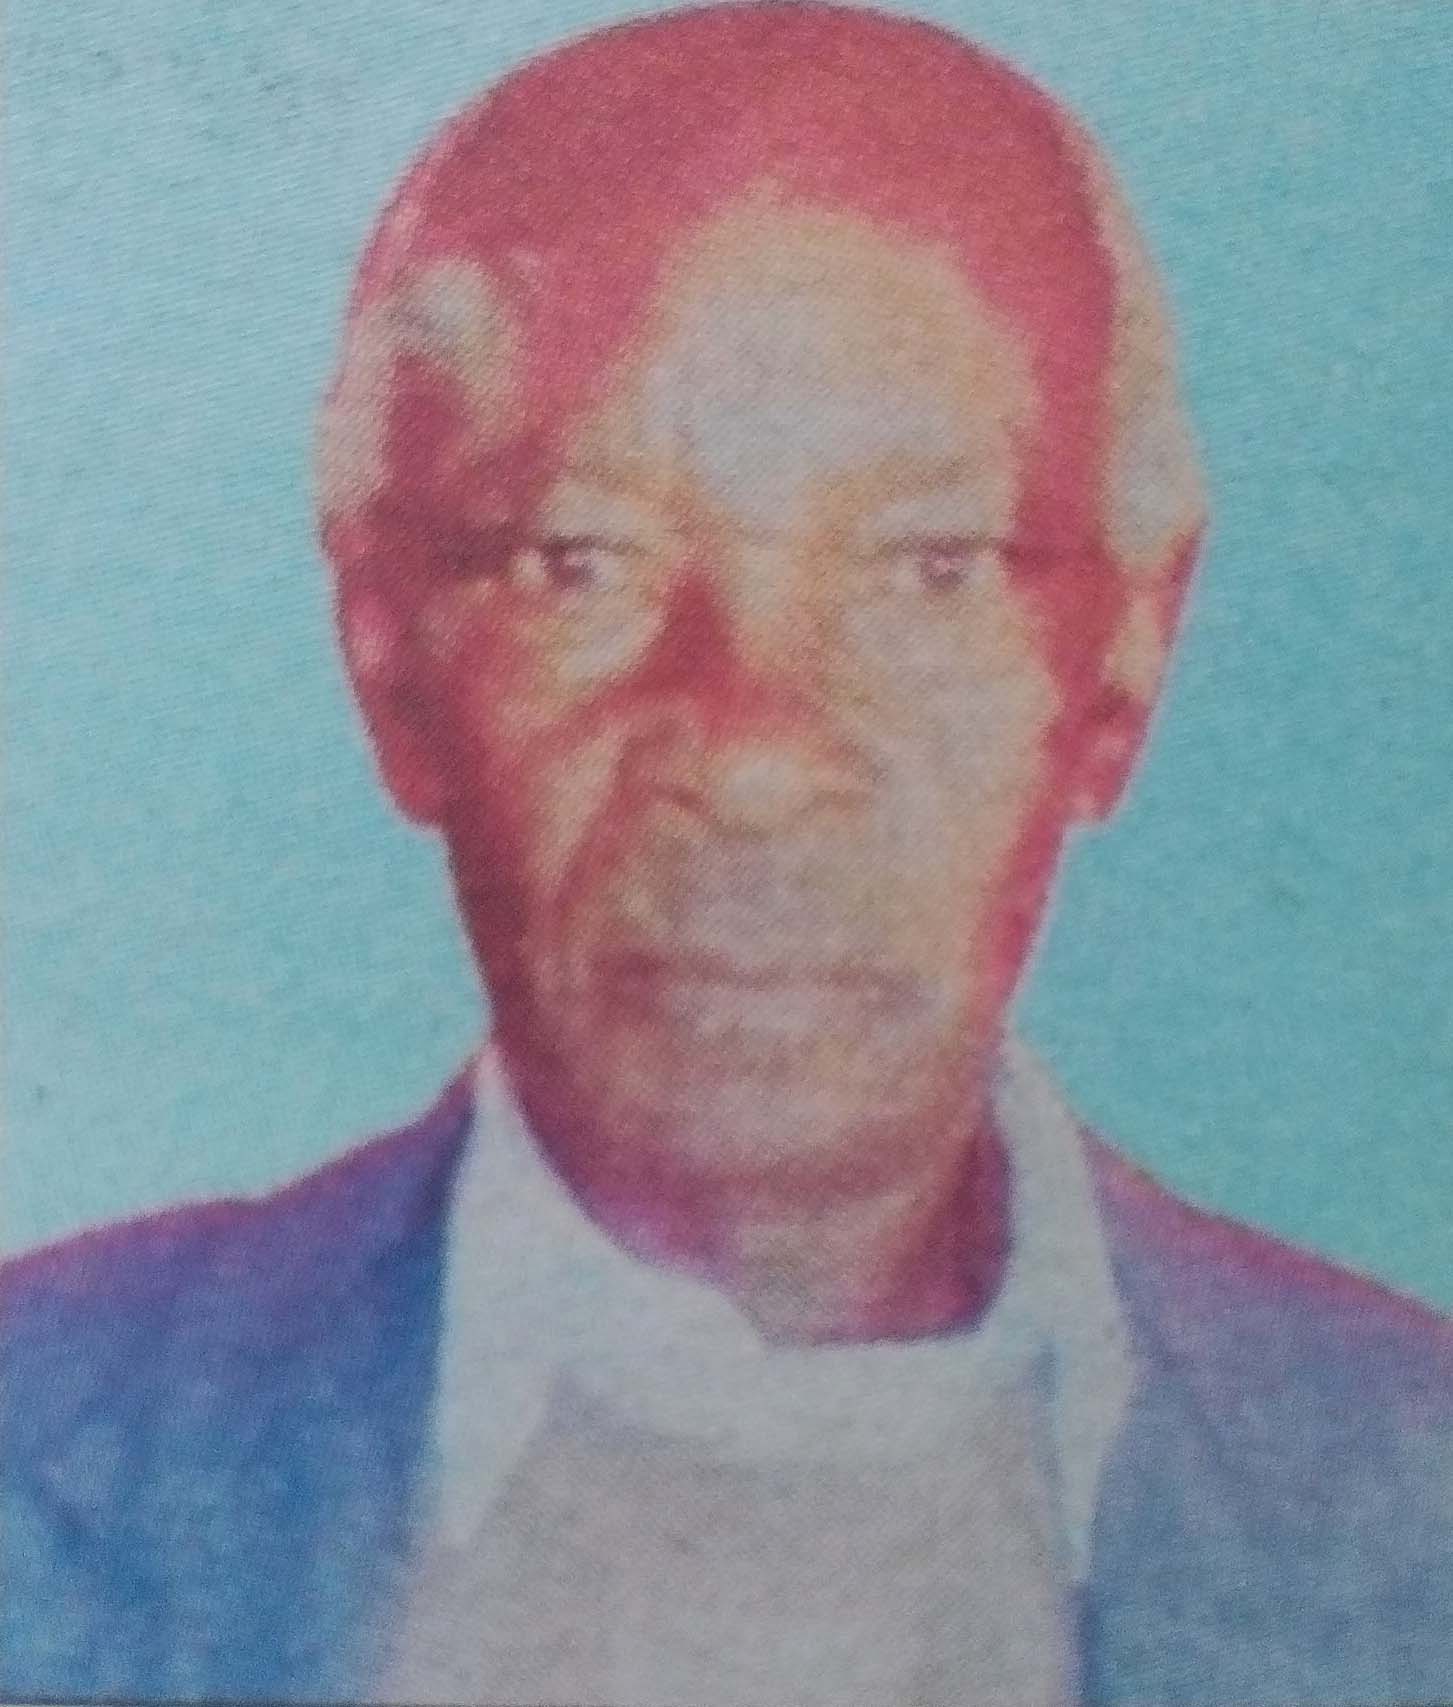 Obituary Image of Peter Njuguna Njoroge a.k.a. Kimuya wa Githere